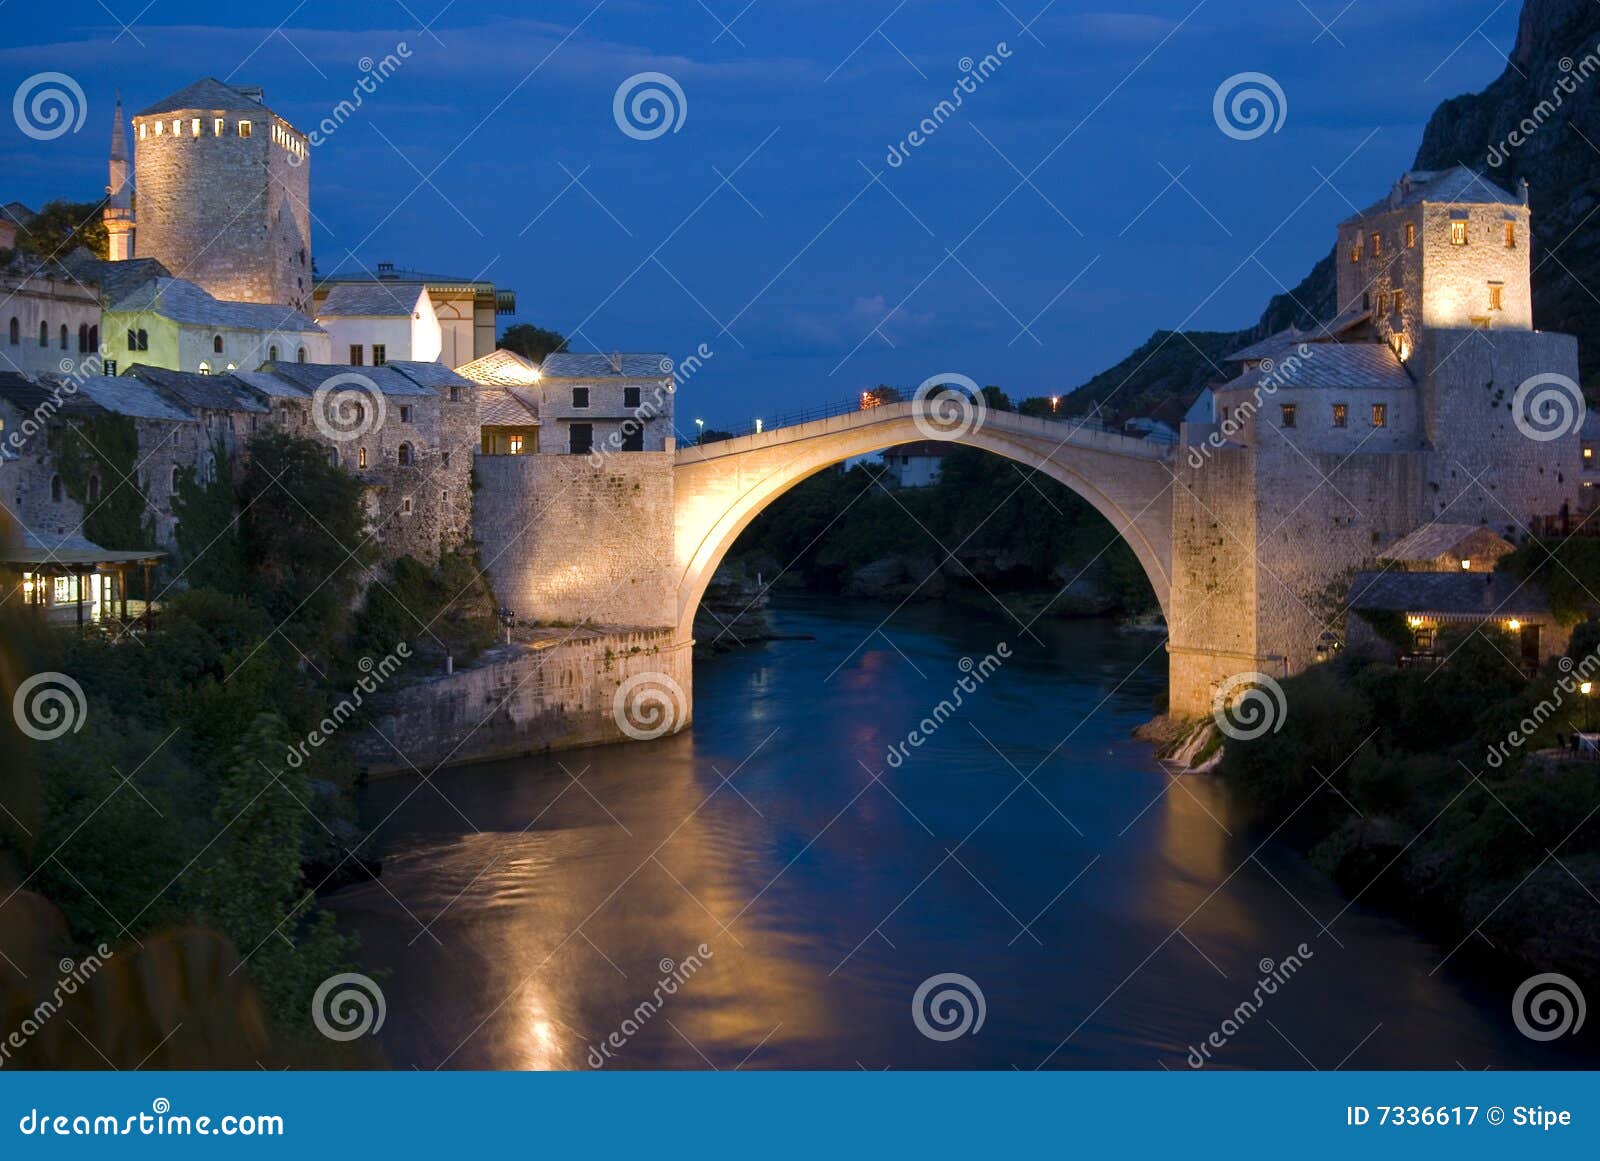 mostar bridge, mostar, bosnia & herzegovina